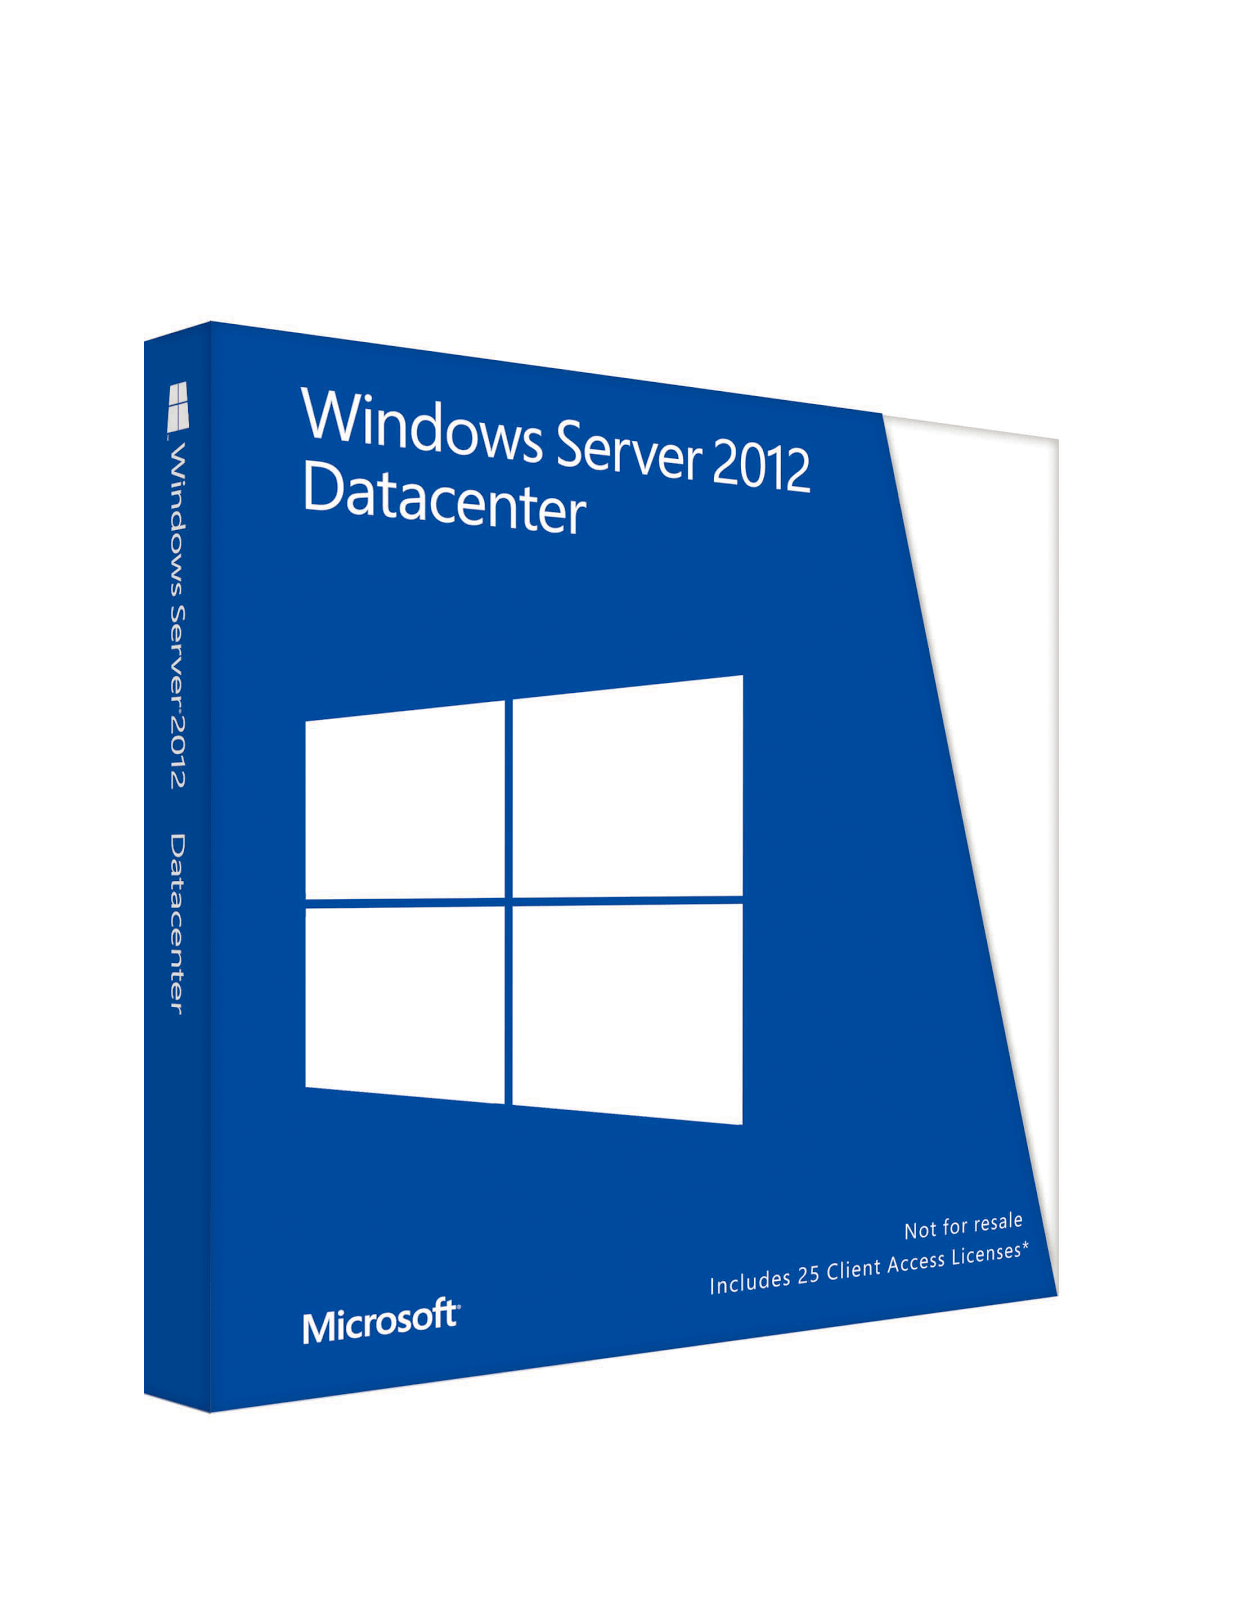 Windows server 2012 datacenter download iso